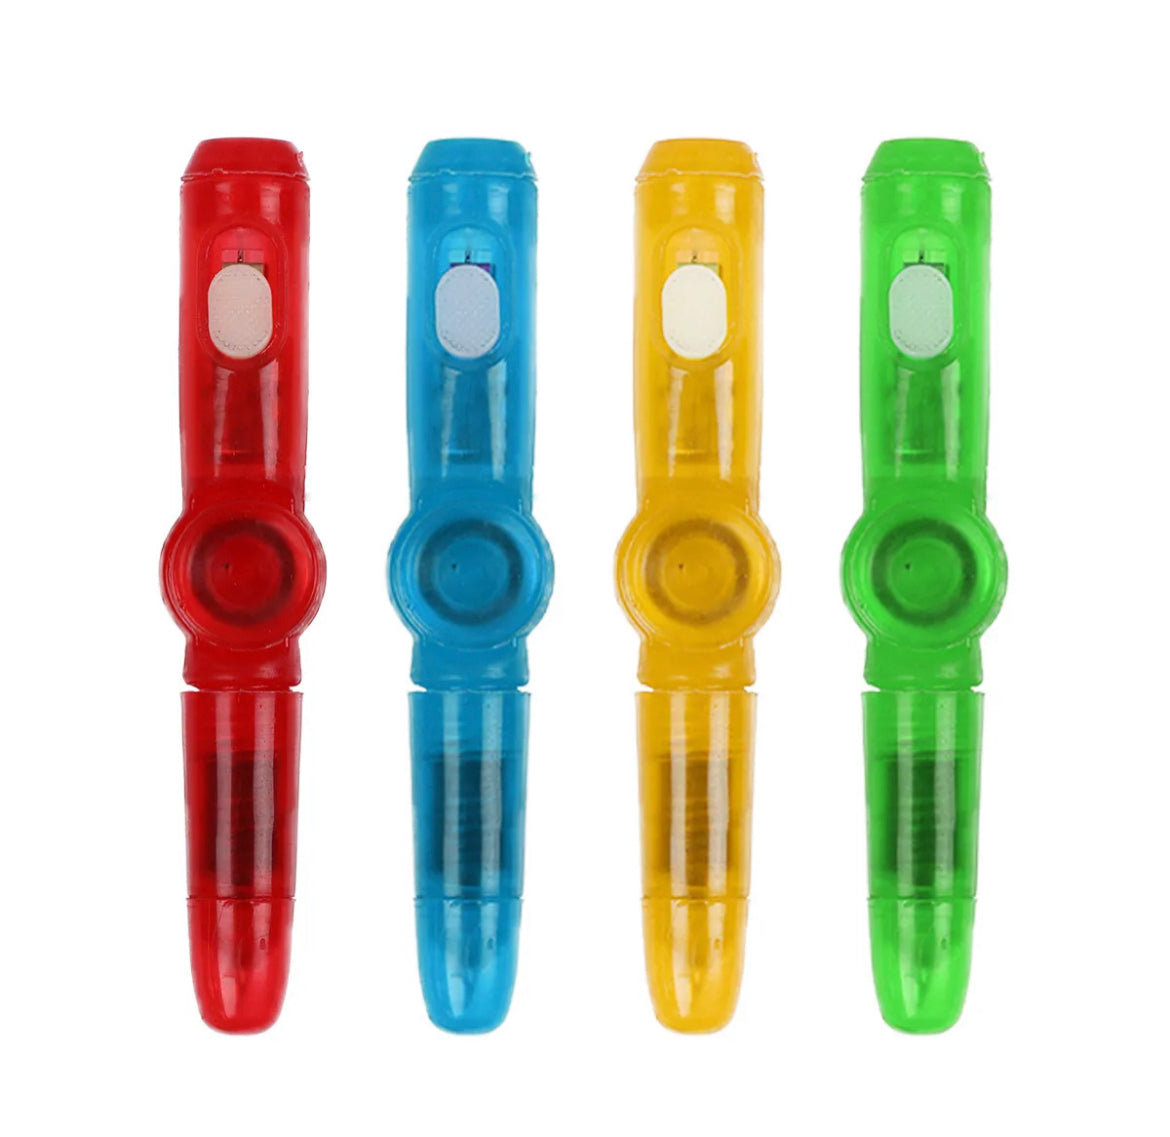 4 Light Up Fidget Spinner Pens